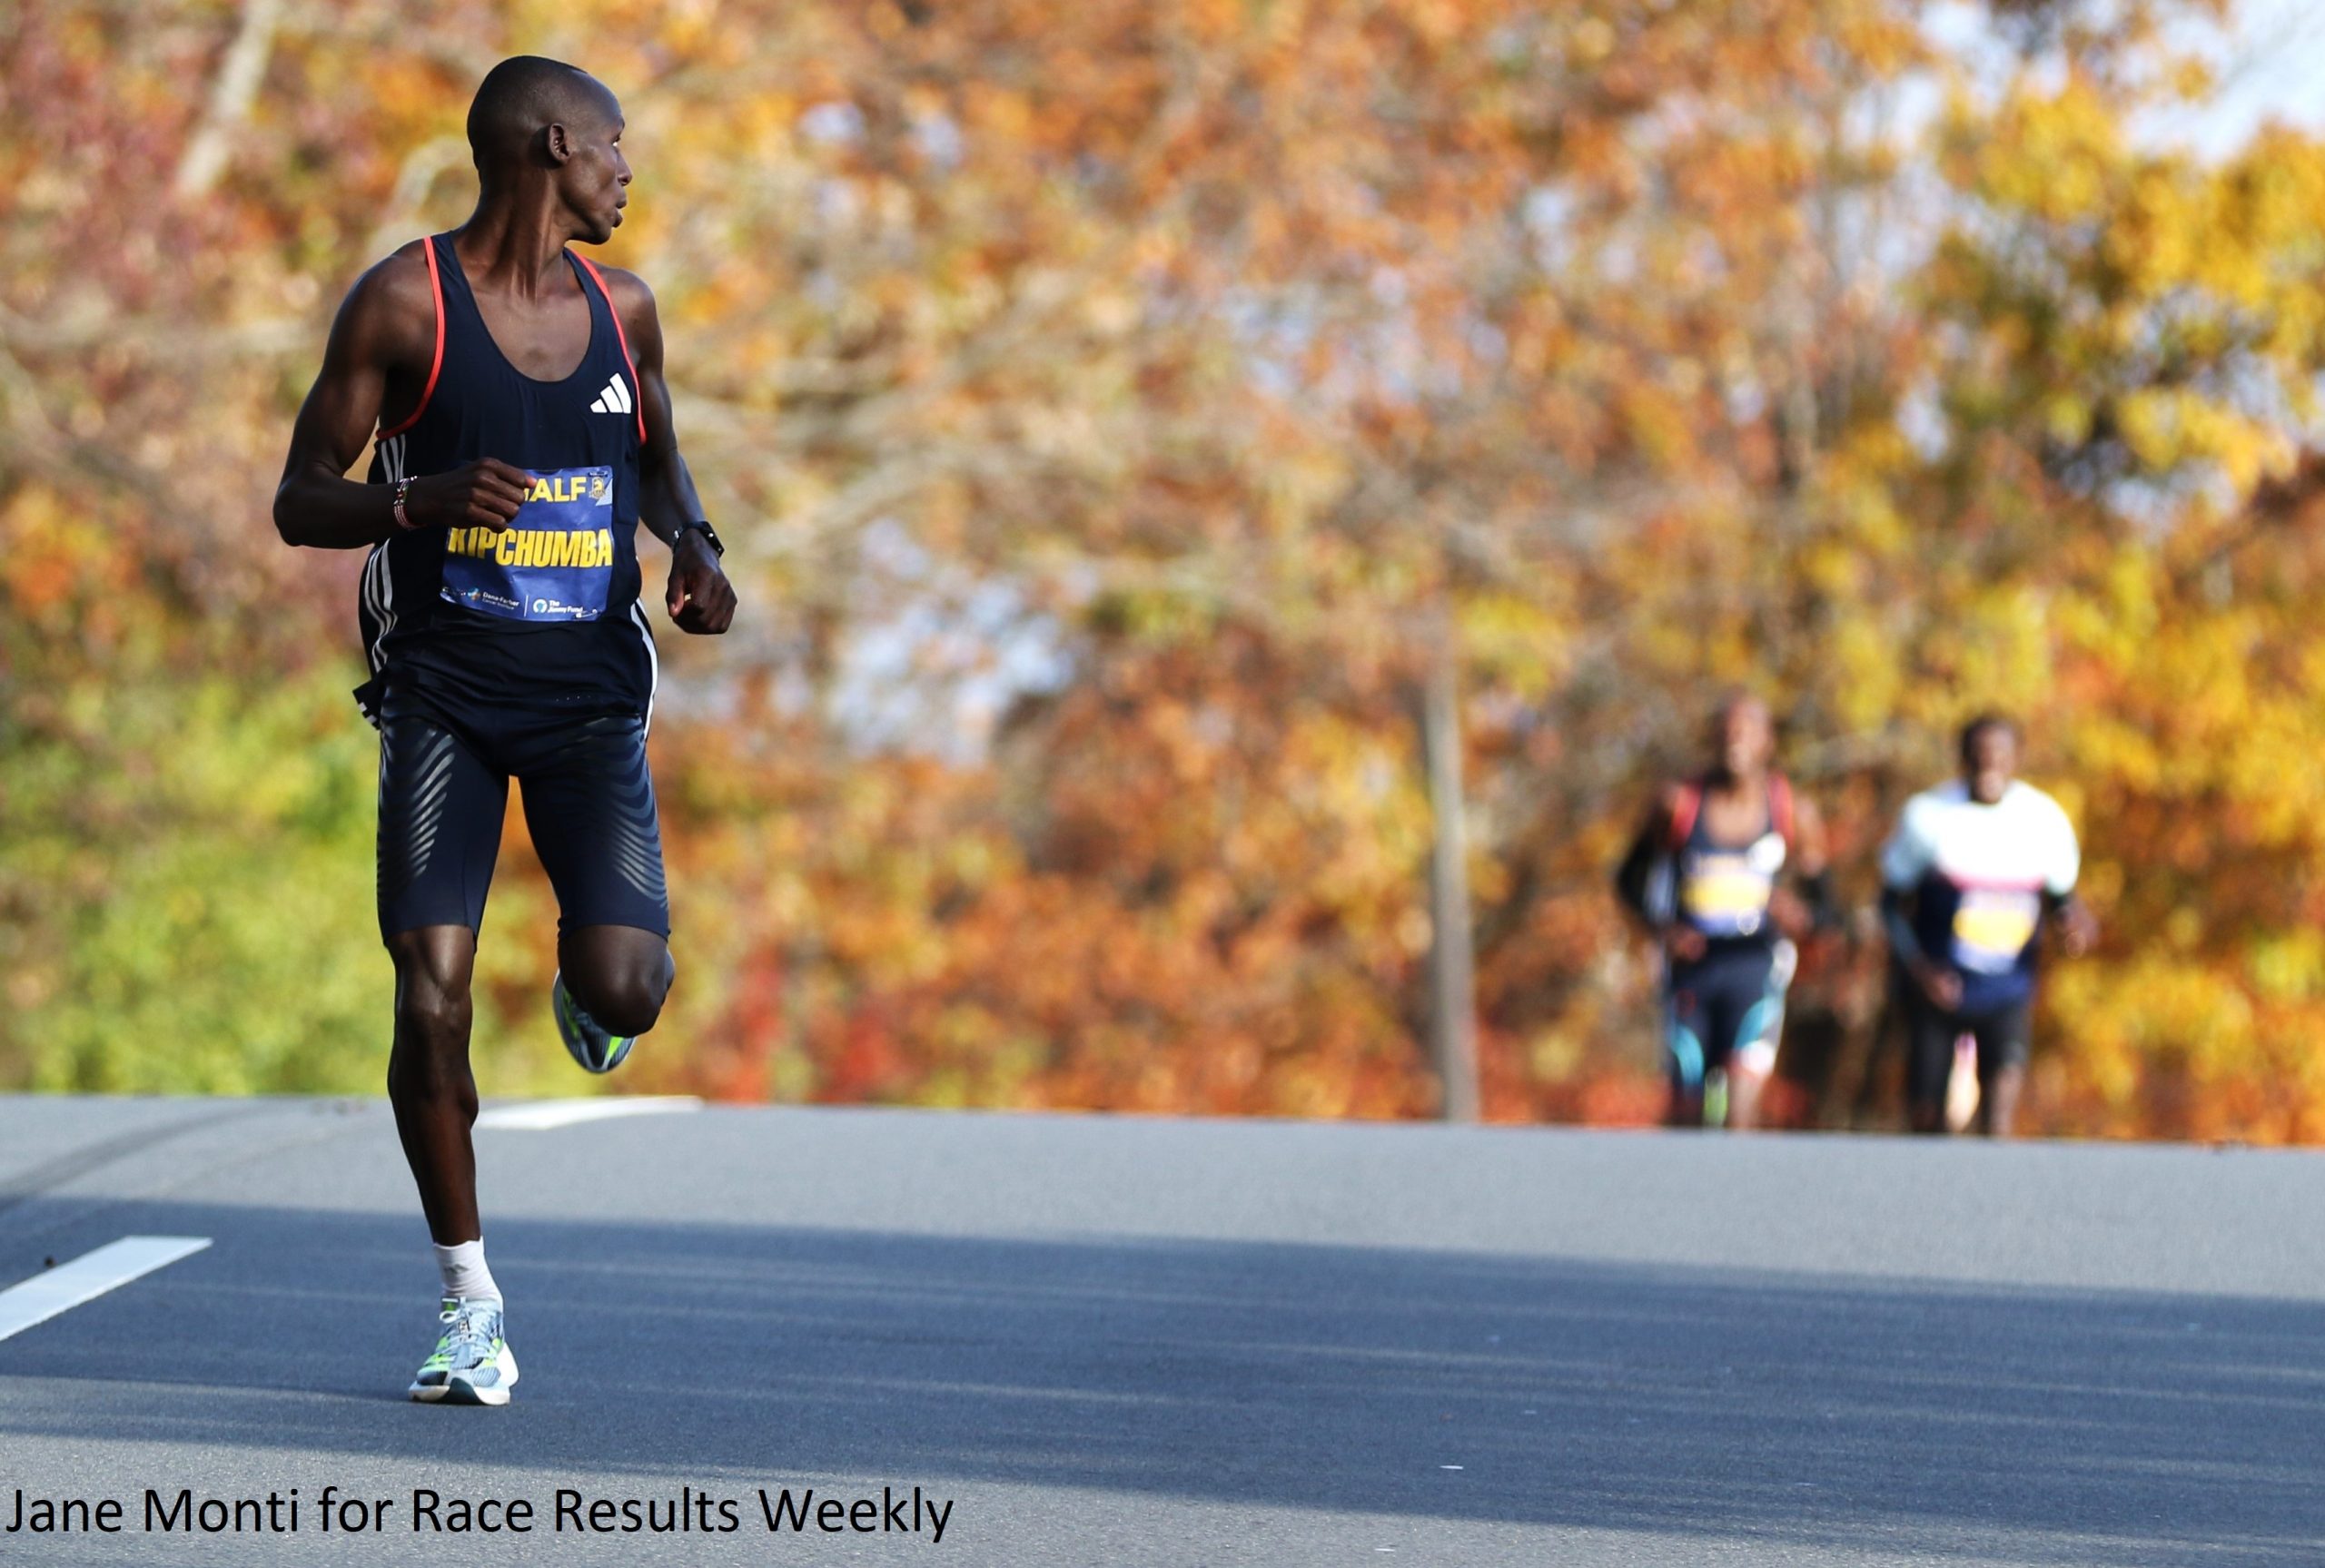 Kenya’s Abel Kipchumba (61:32) And Ethiopia’s Fotyen Tesfay (68:46) Win Frosty BAA Half-Marathon; Keira D’Amato 4th